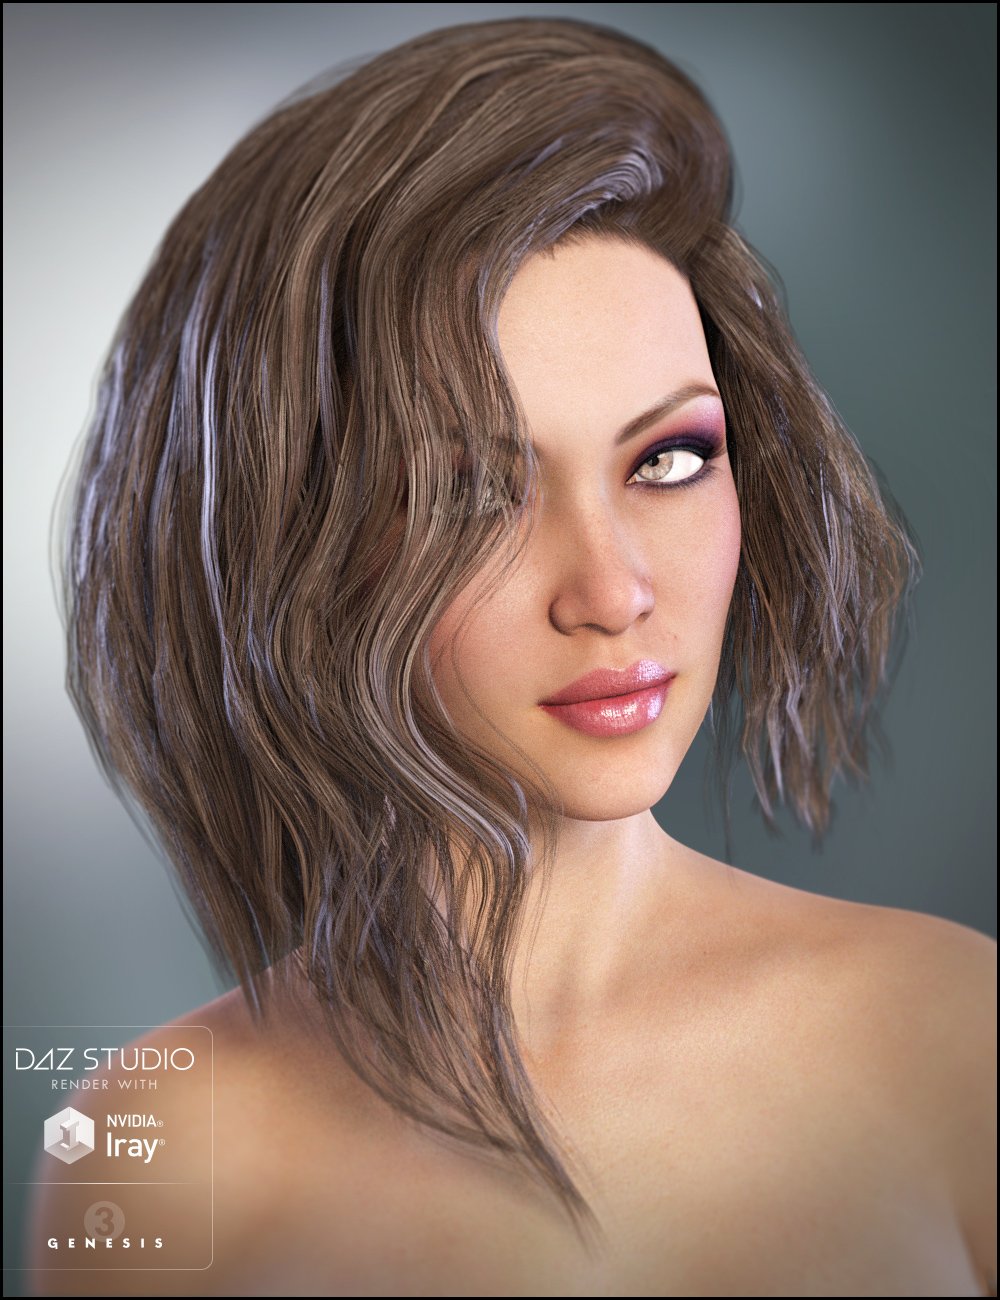 Myrina for Olympia 7 by: Jessaii, 3D Models by Daz 3D